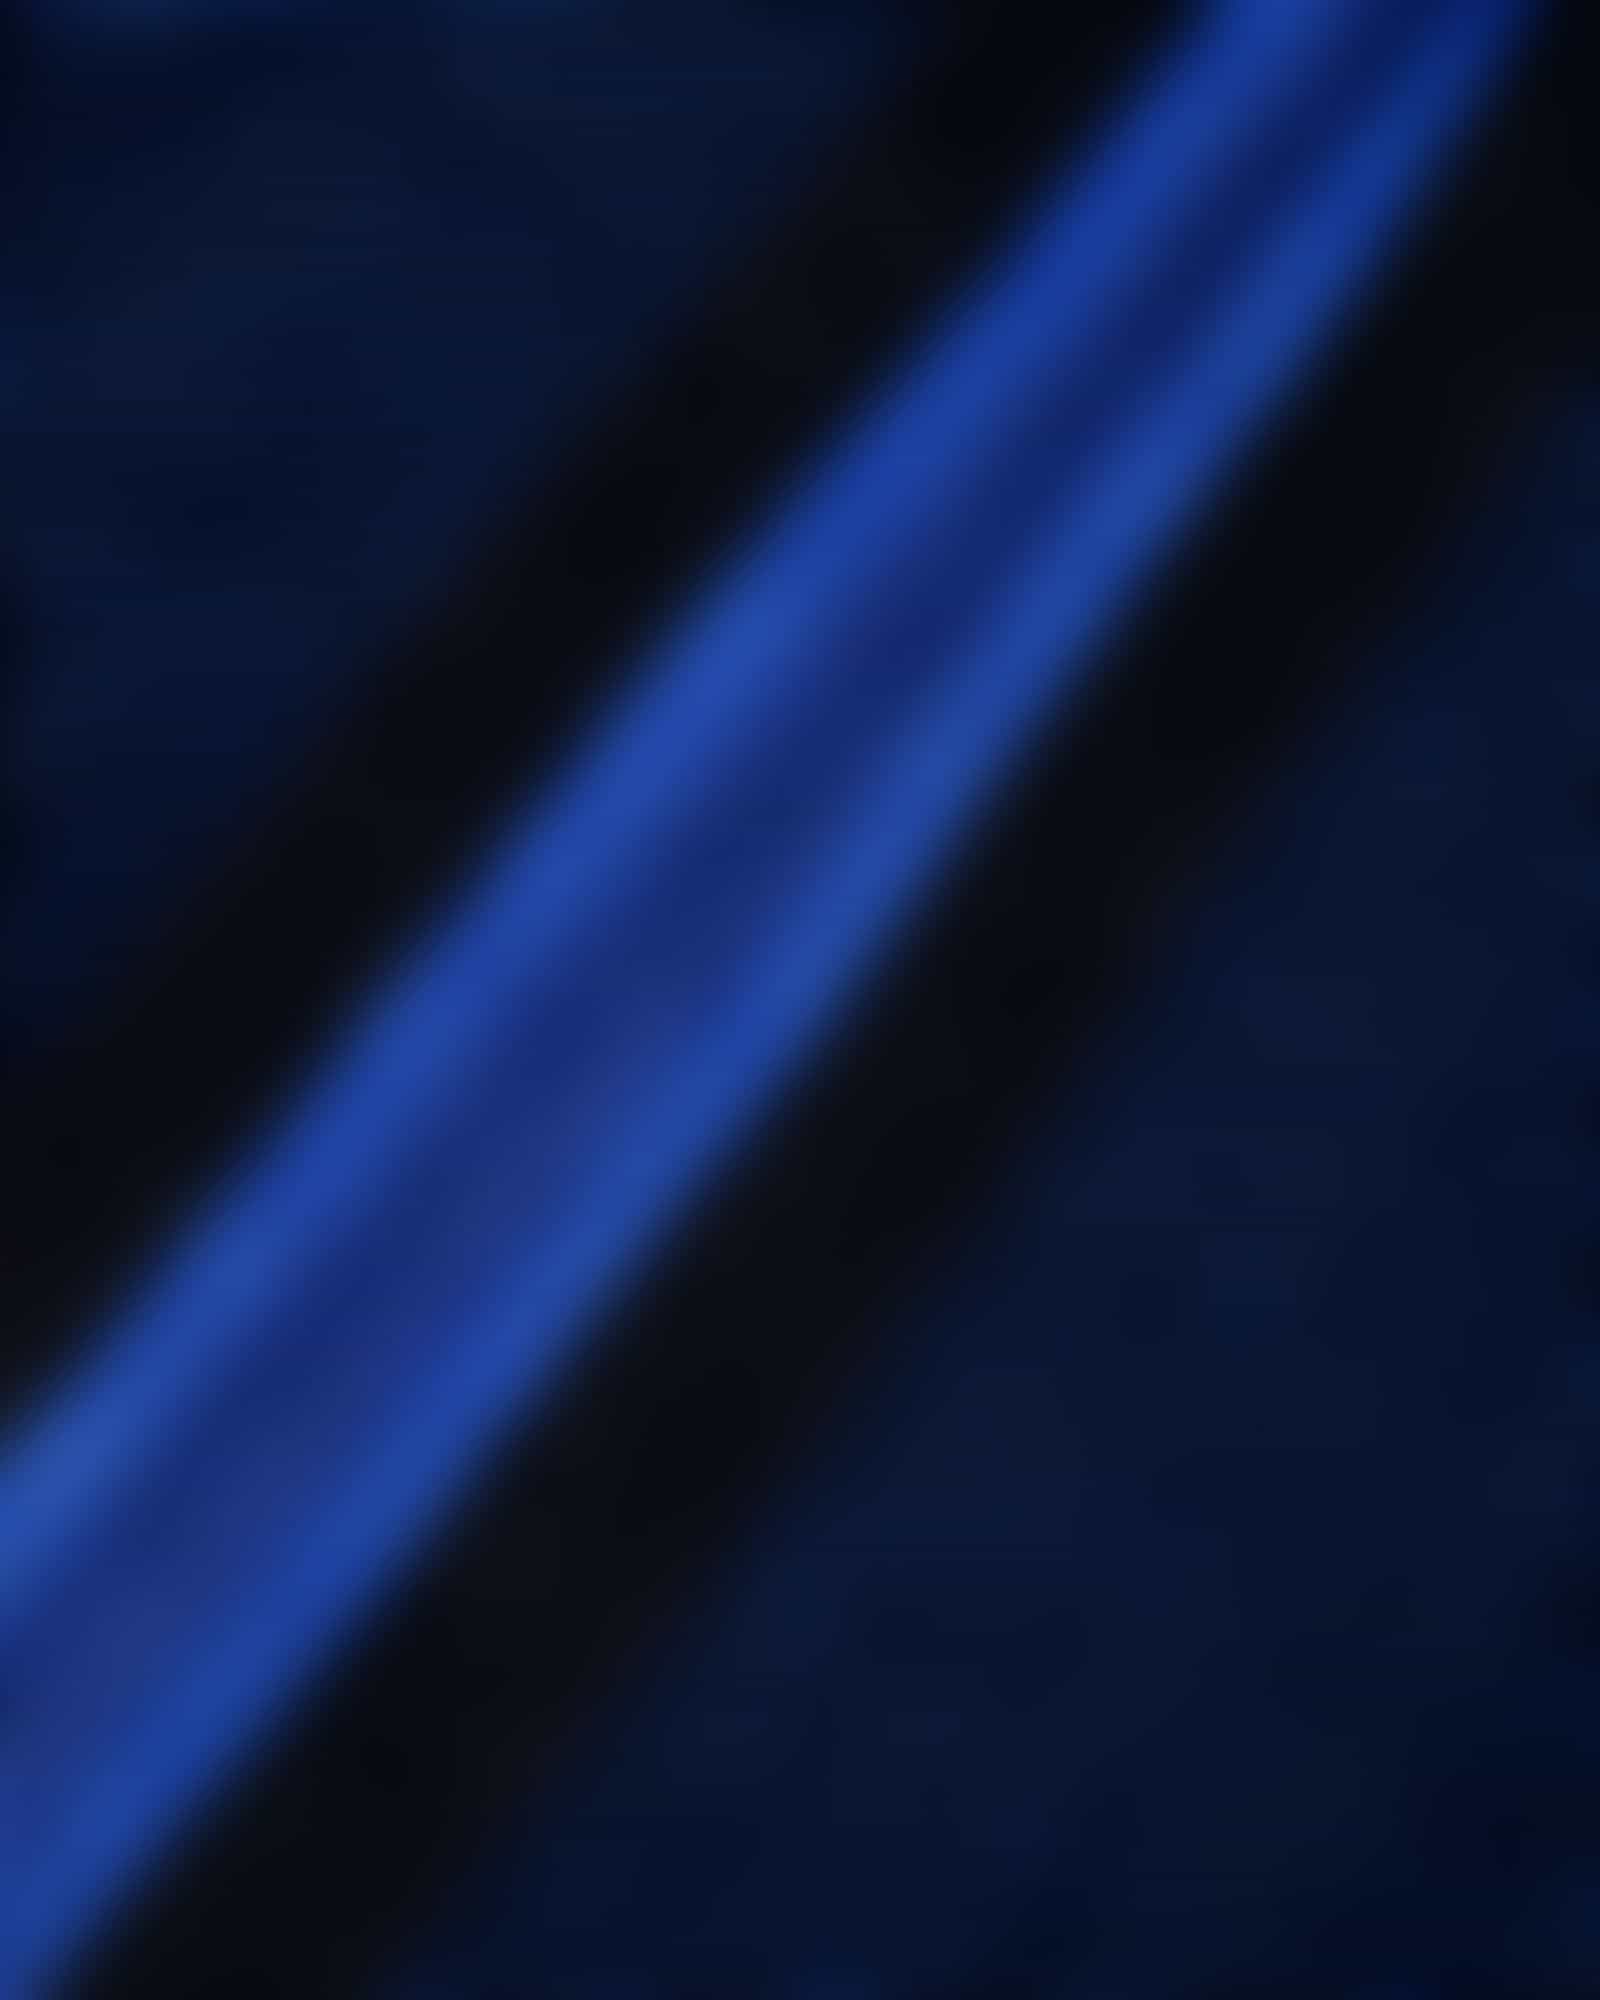 Cawö - Herren Bademantel Kimono 4839 - Farbe: blau/schwarz - 19 - XL